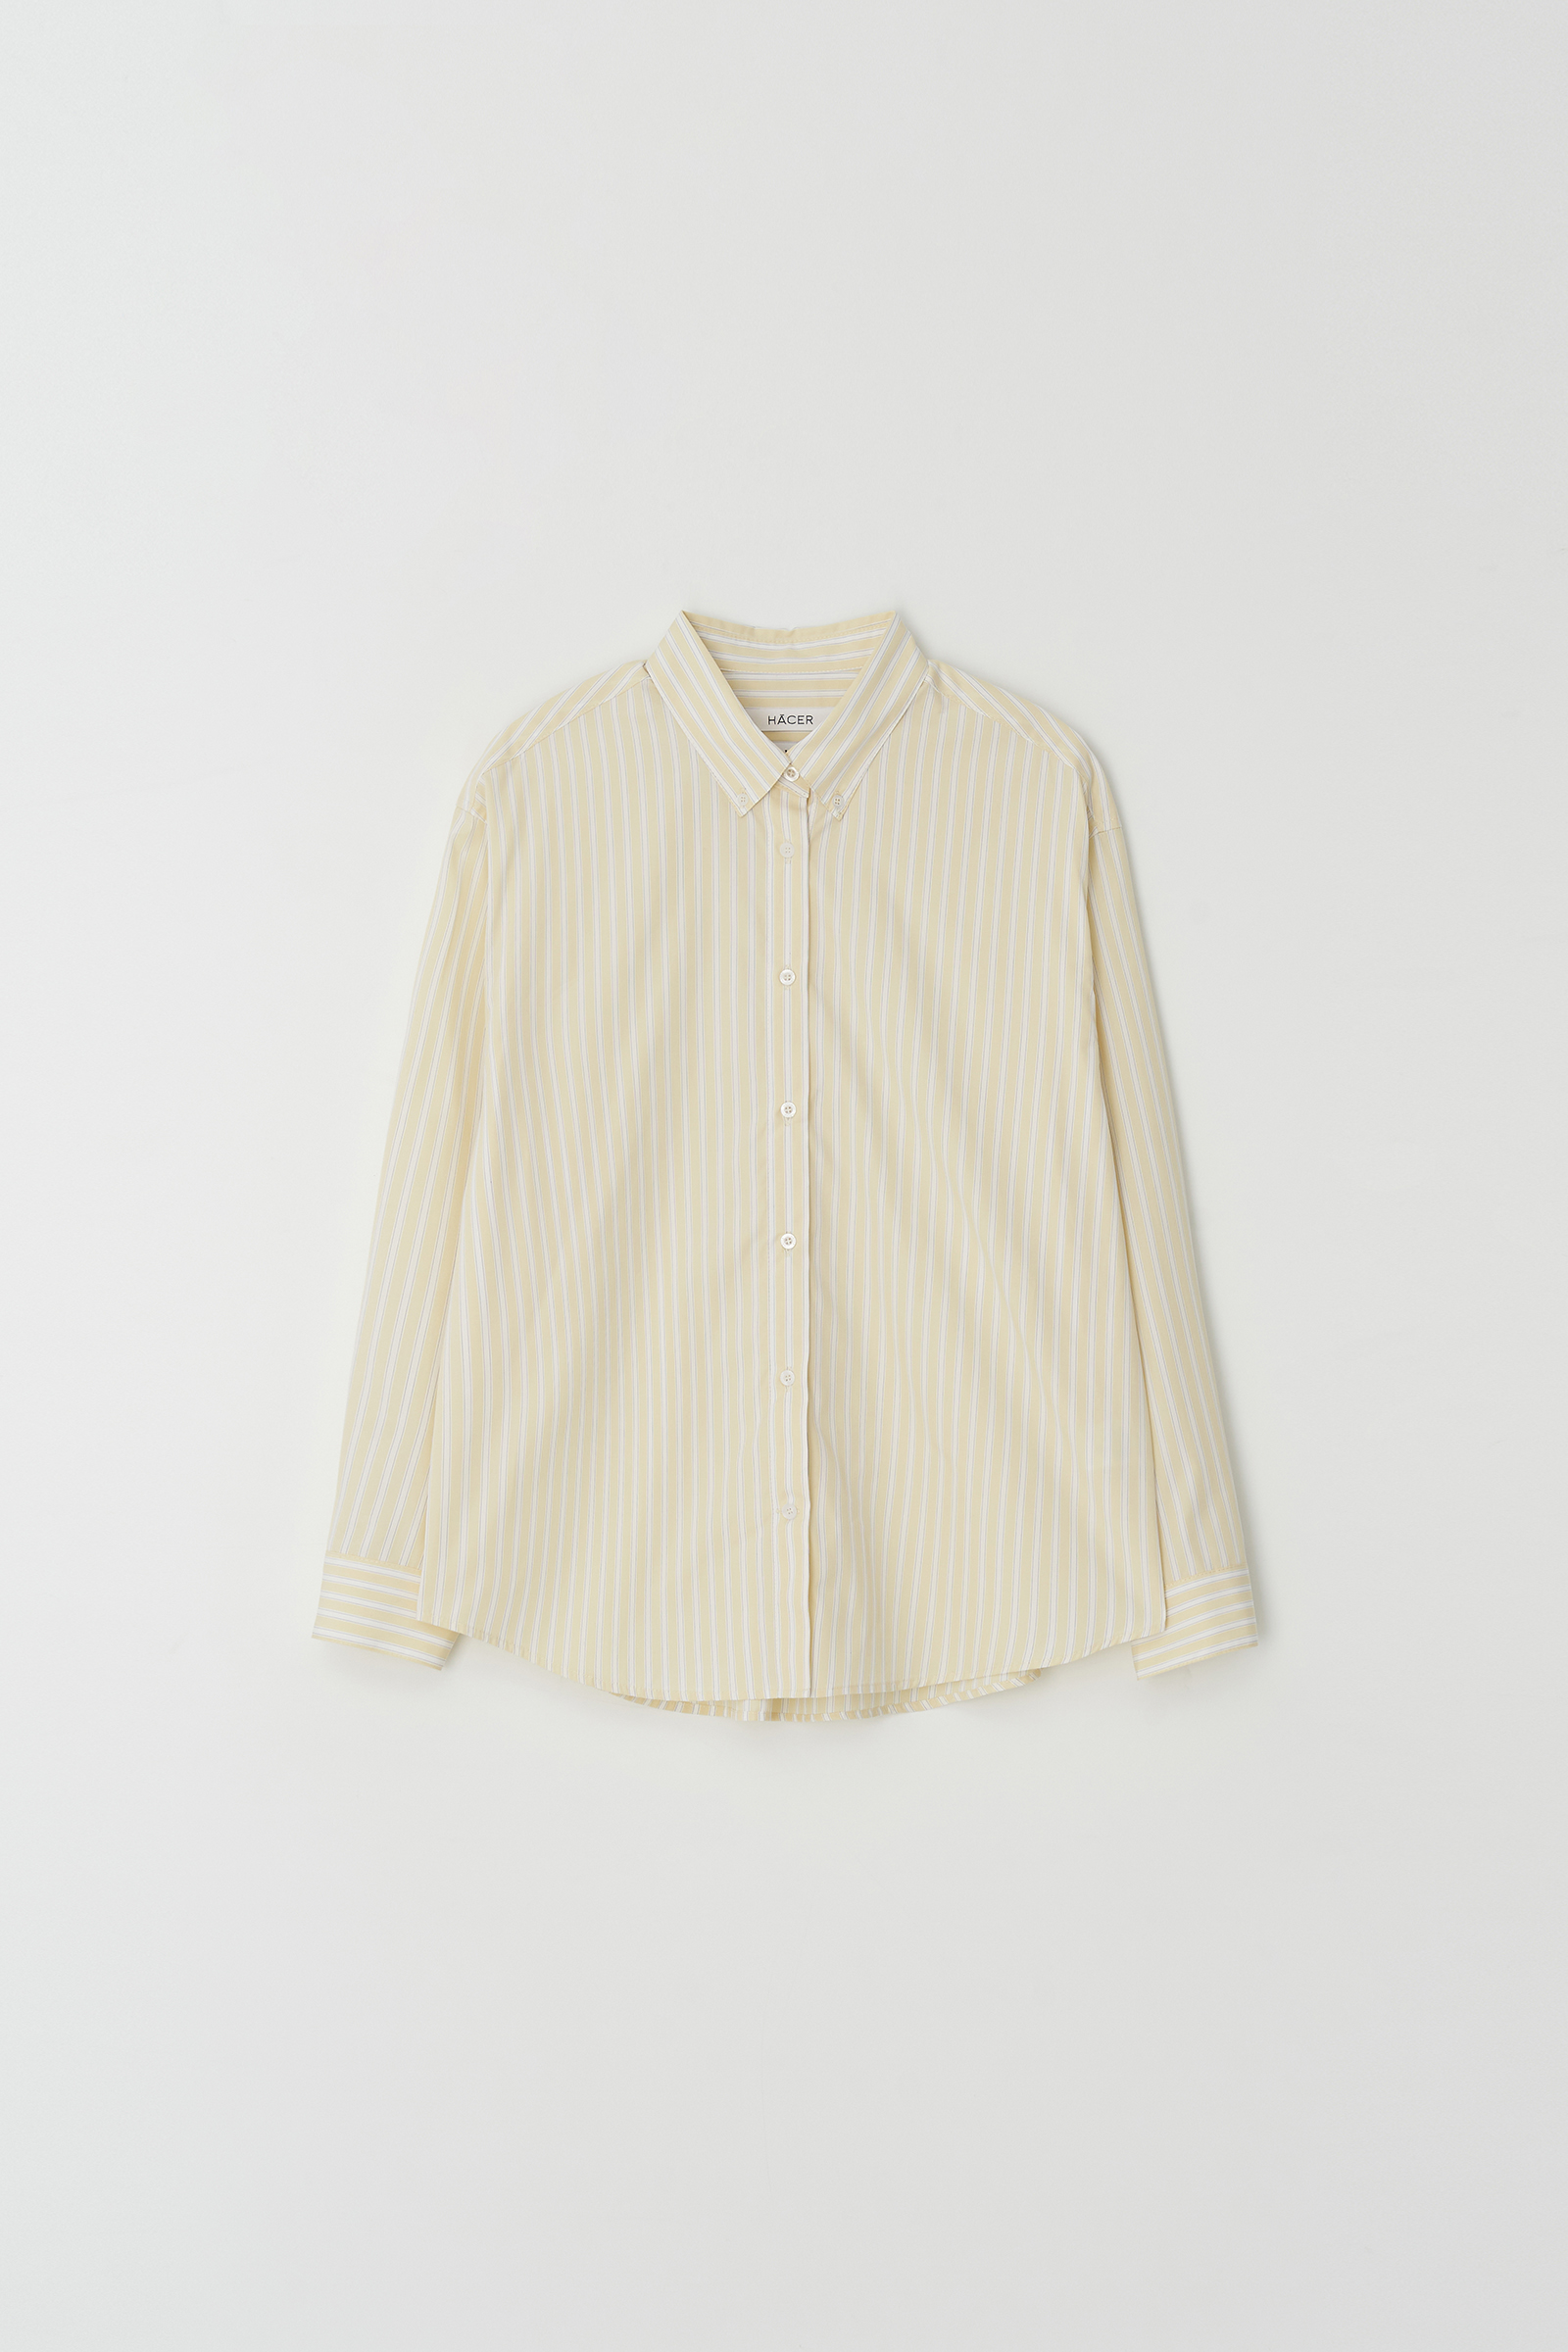 Ichimen Stripe Shirt (Fabric By ICHIMEN)